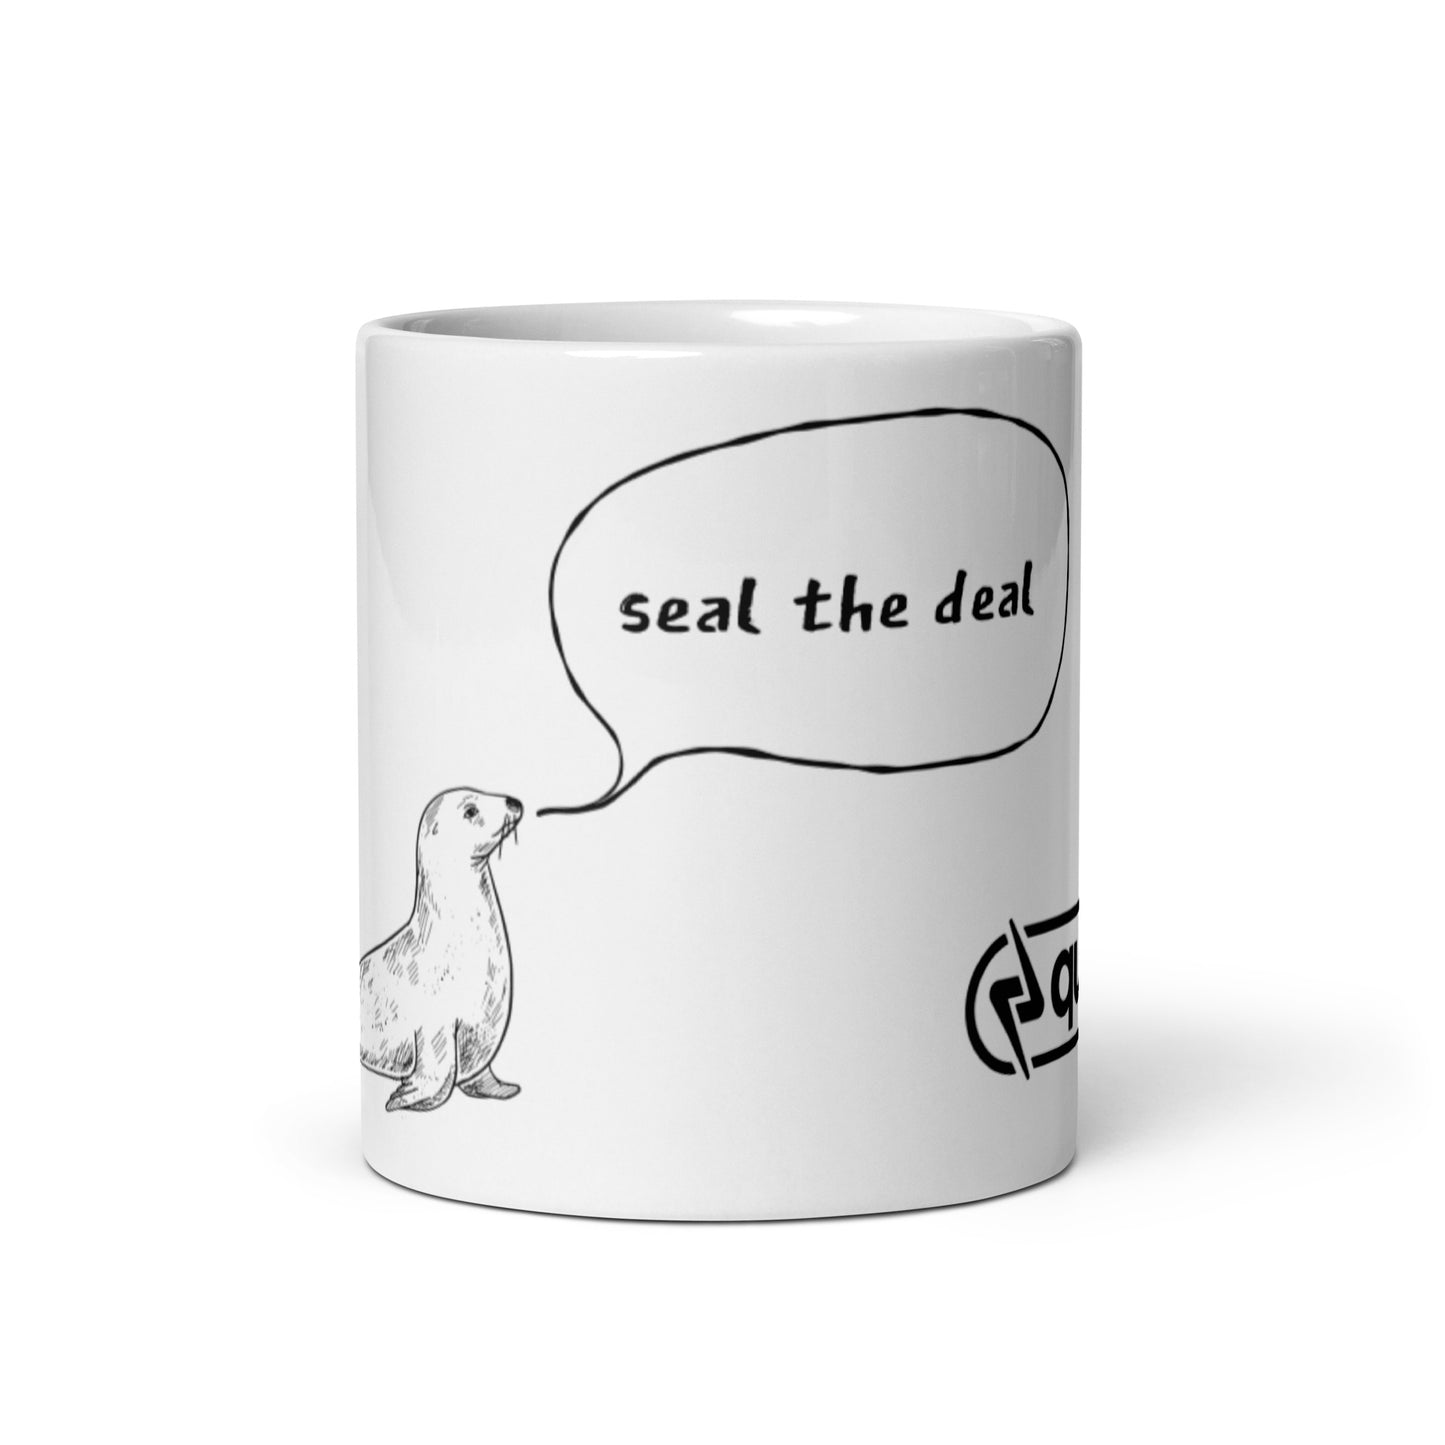 Seal the deal mug